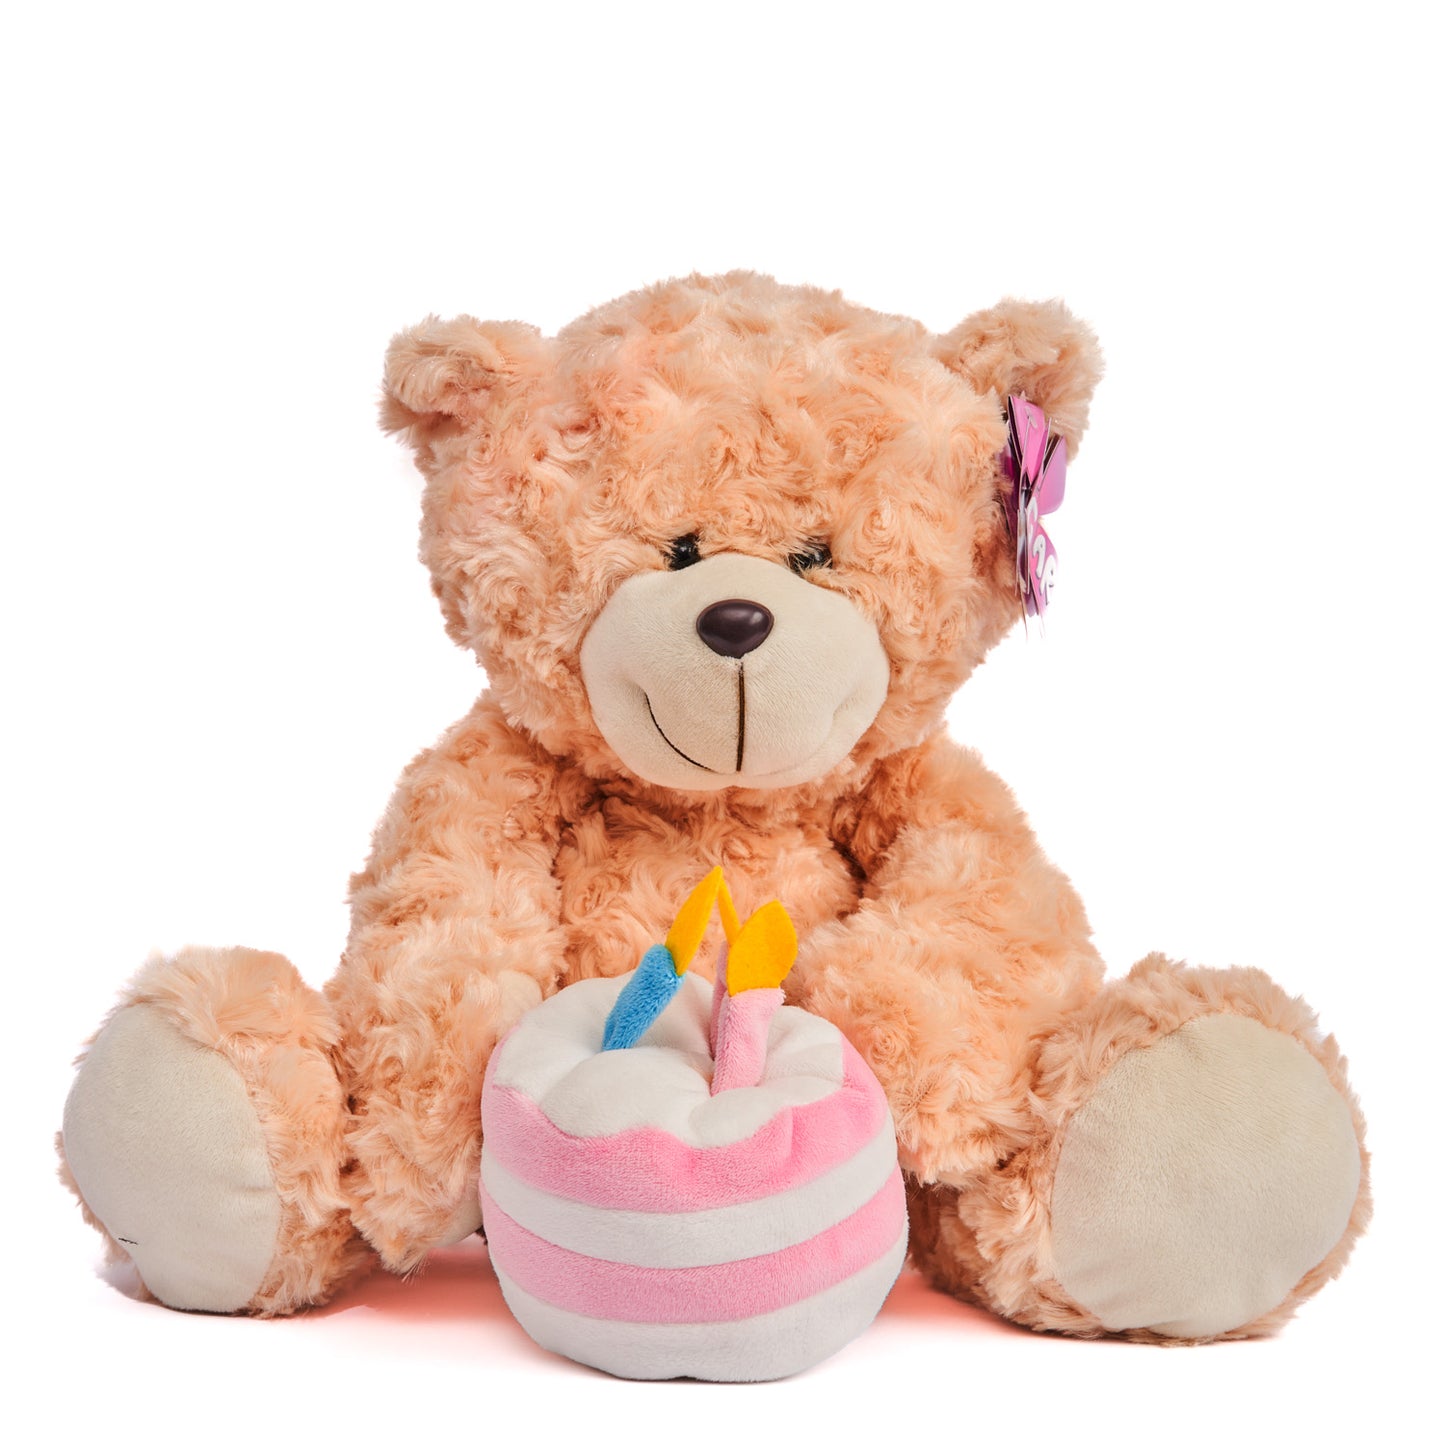 Birthday - Her - Teddy